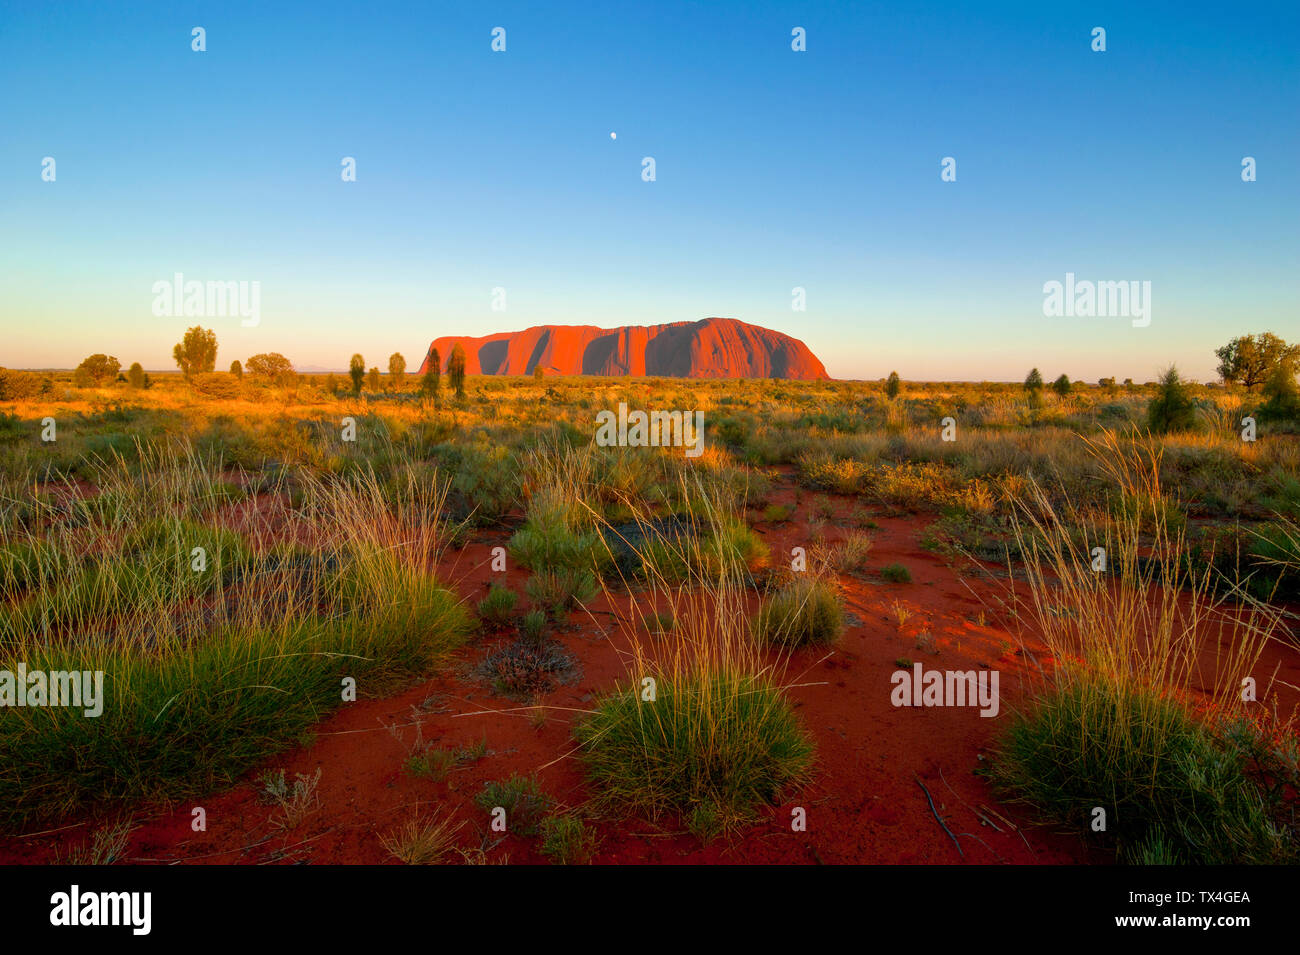 Uluru, Ayers Rock, Northern Territory, Australia Foto de stock